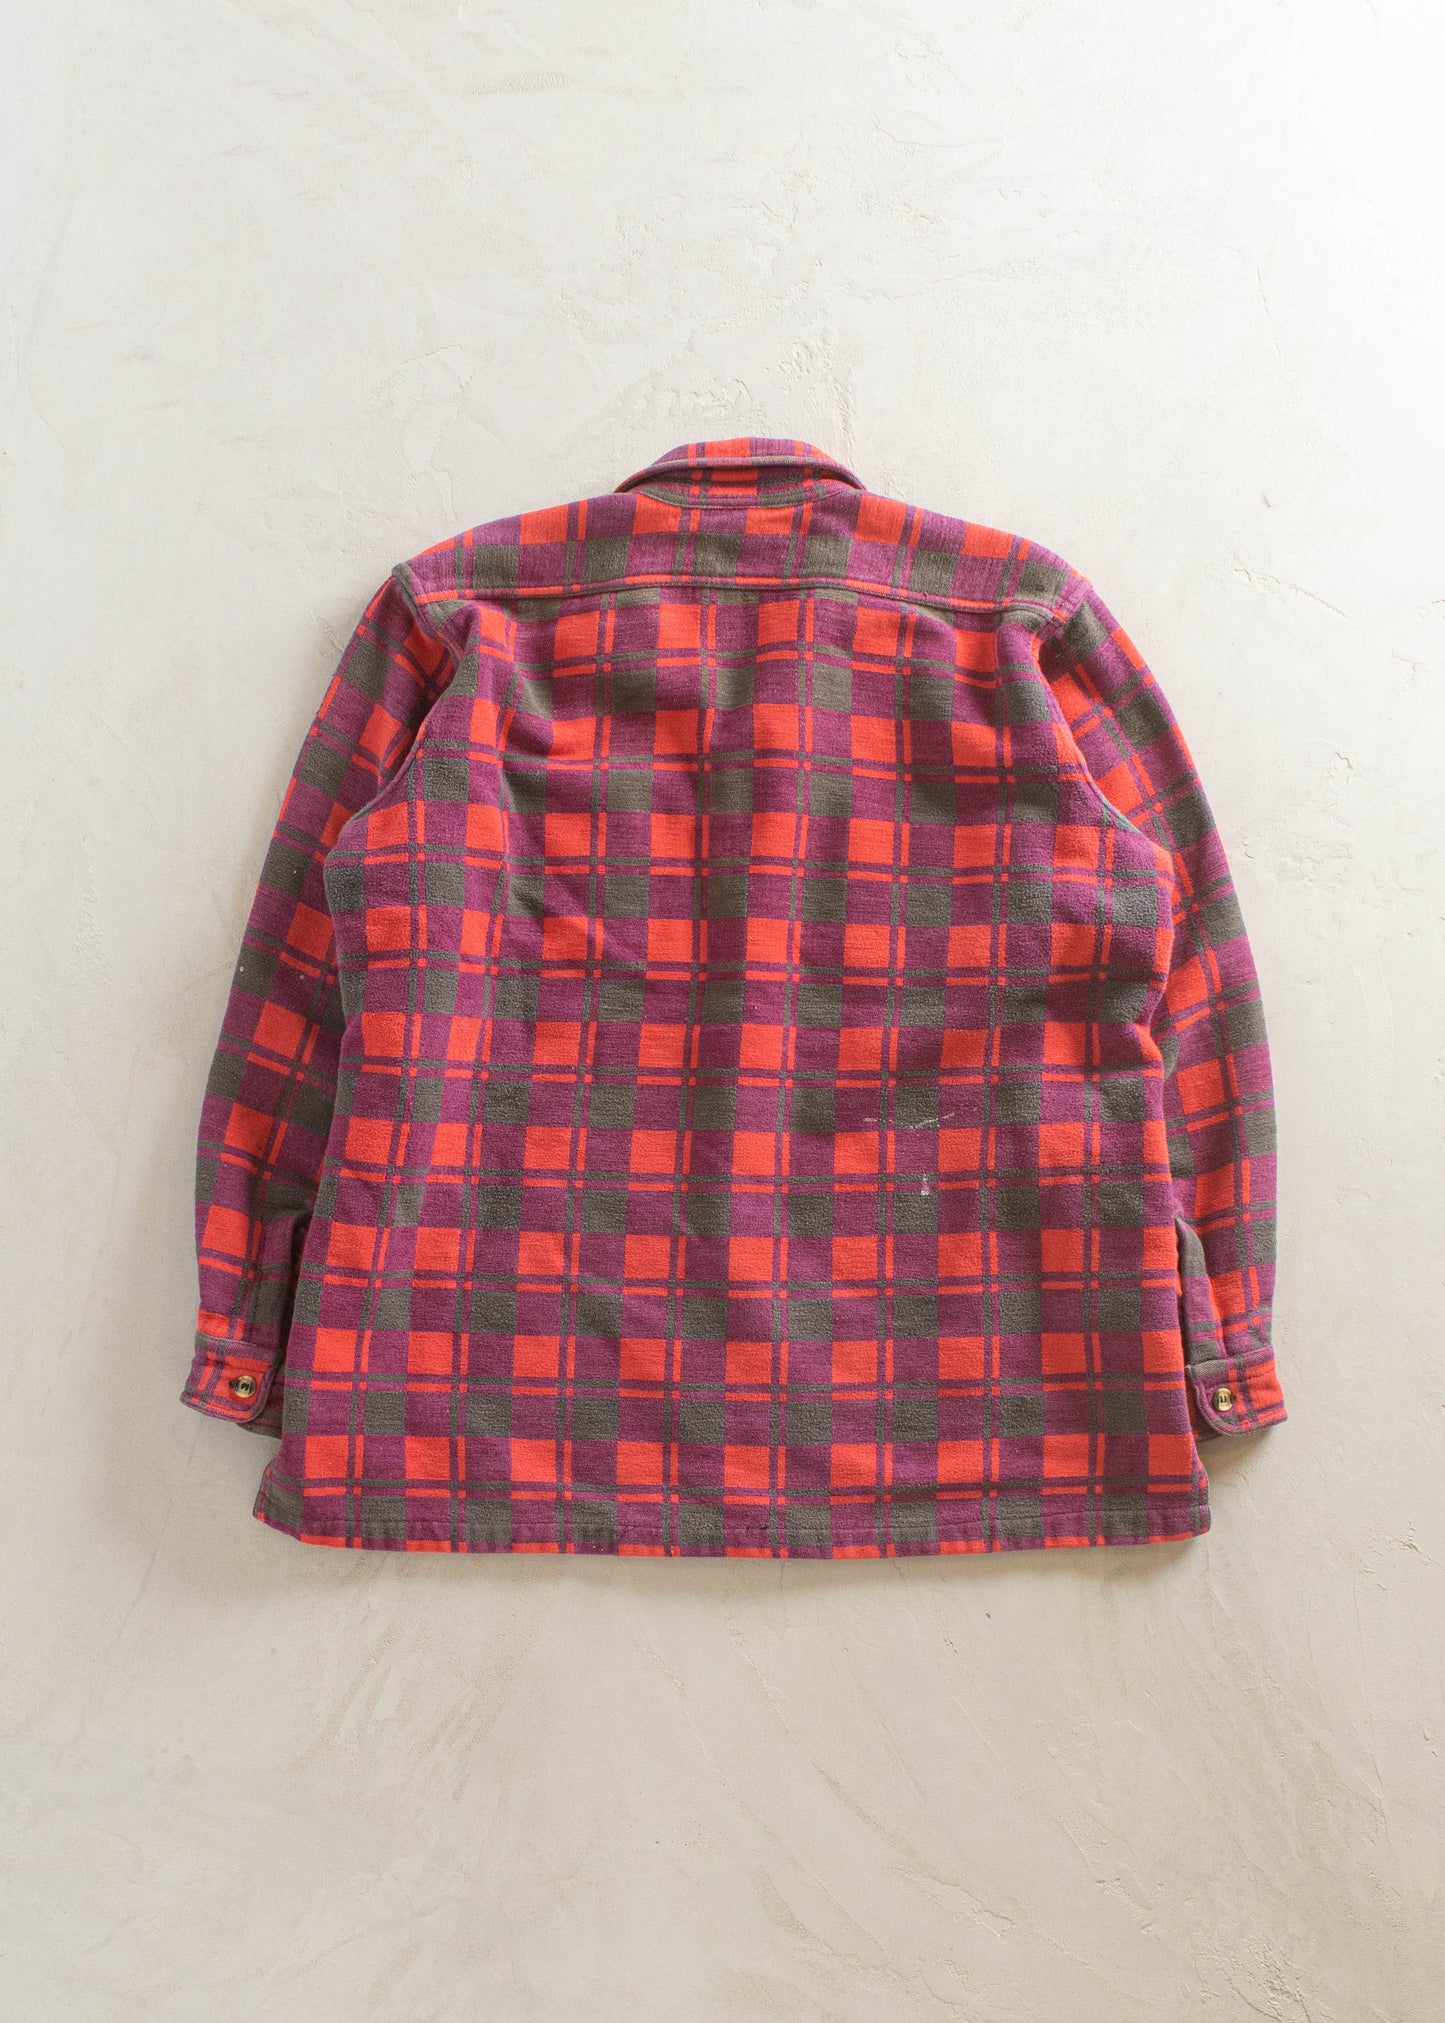 1980s Bison Flannel Button Up Shirt Size M/L